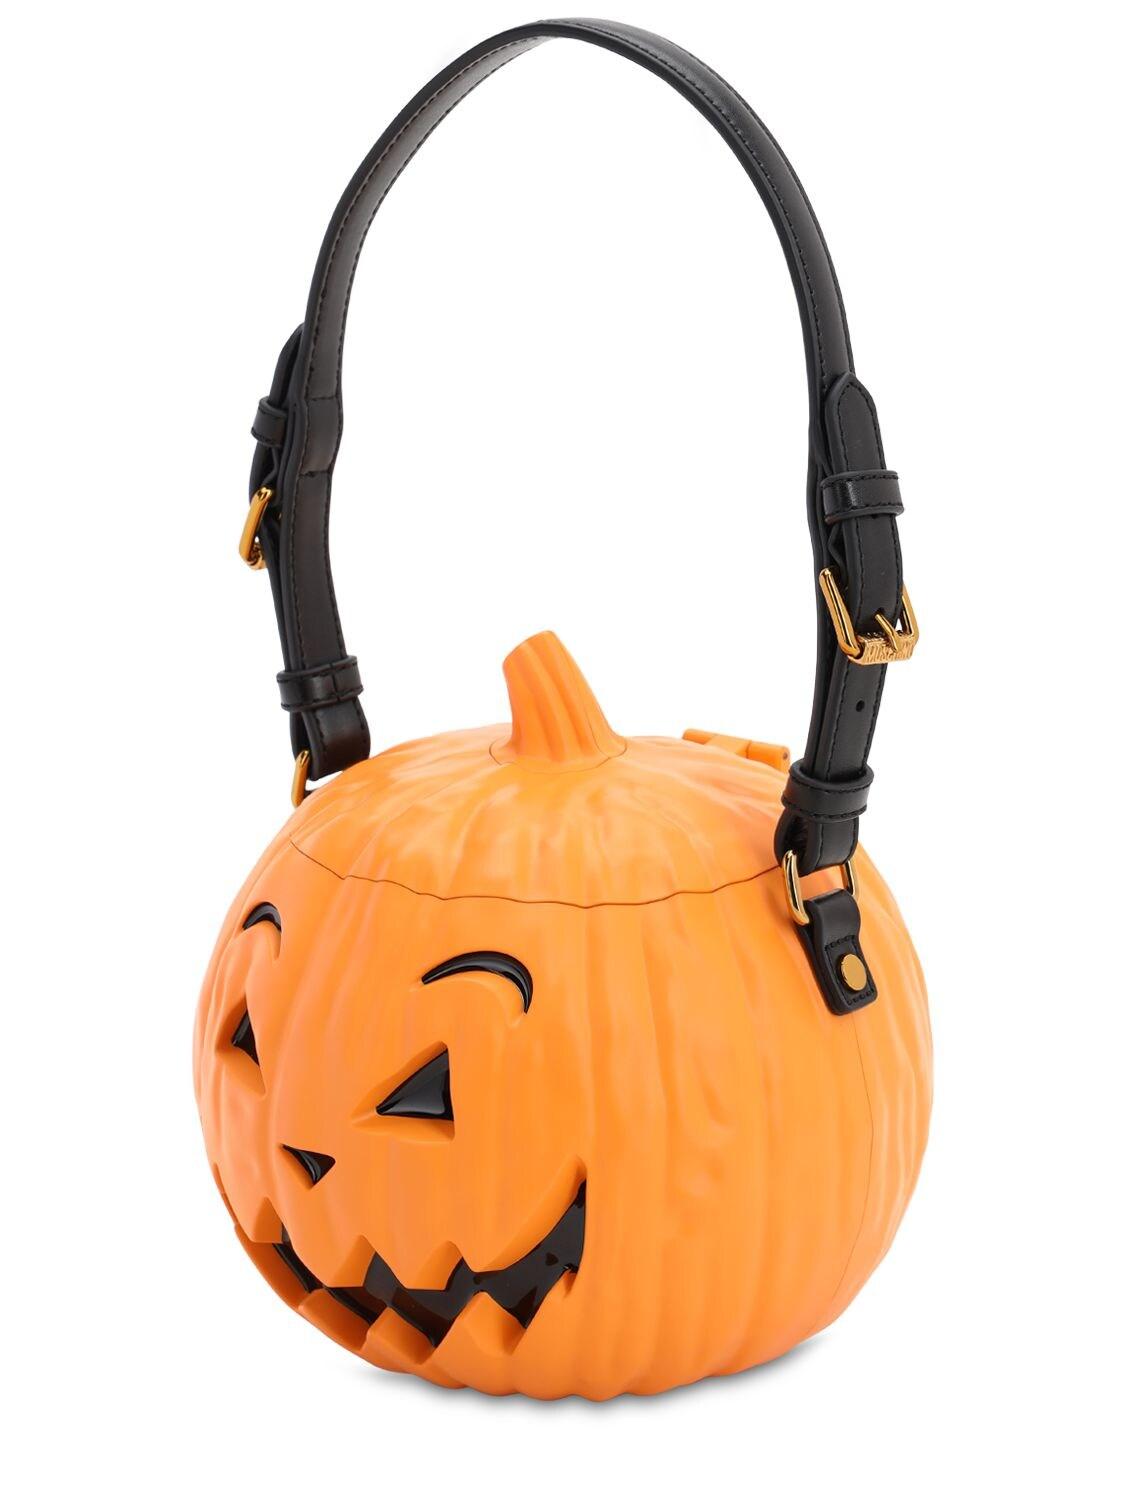 Pumpkin Trick or Treat bag/basket SEWING PATTERN | Halloween bags, Bag  patterns to sew, Trick or treat bags